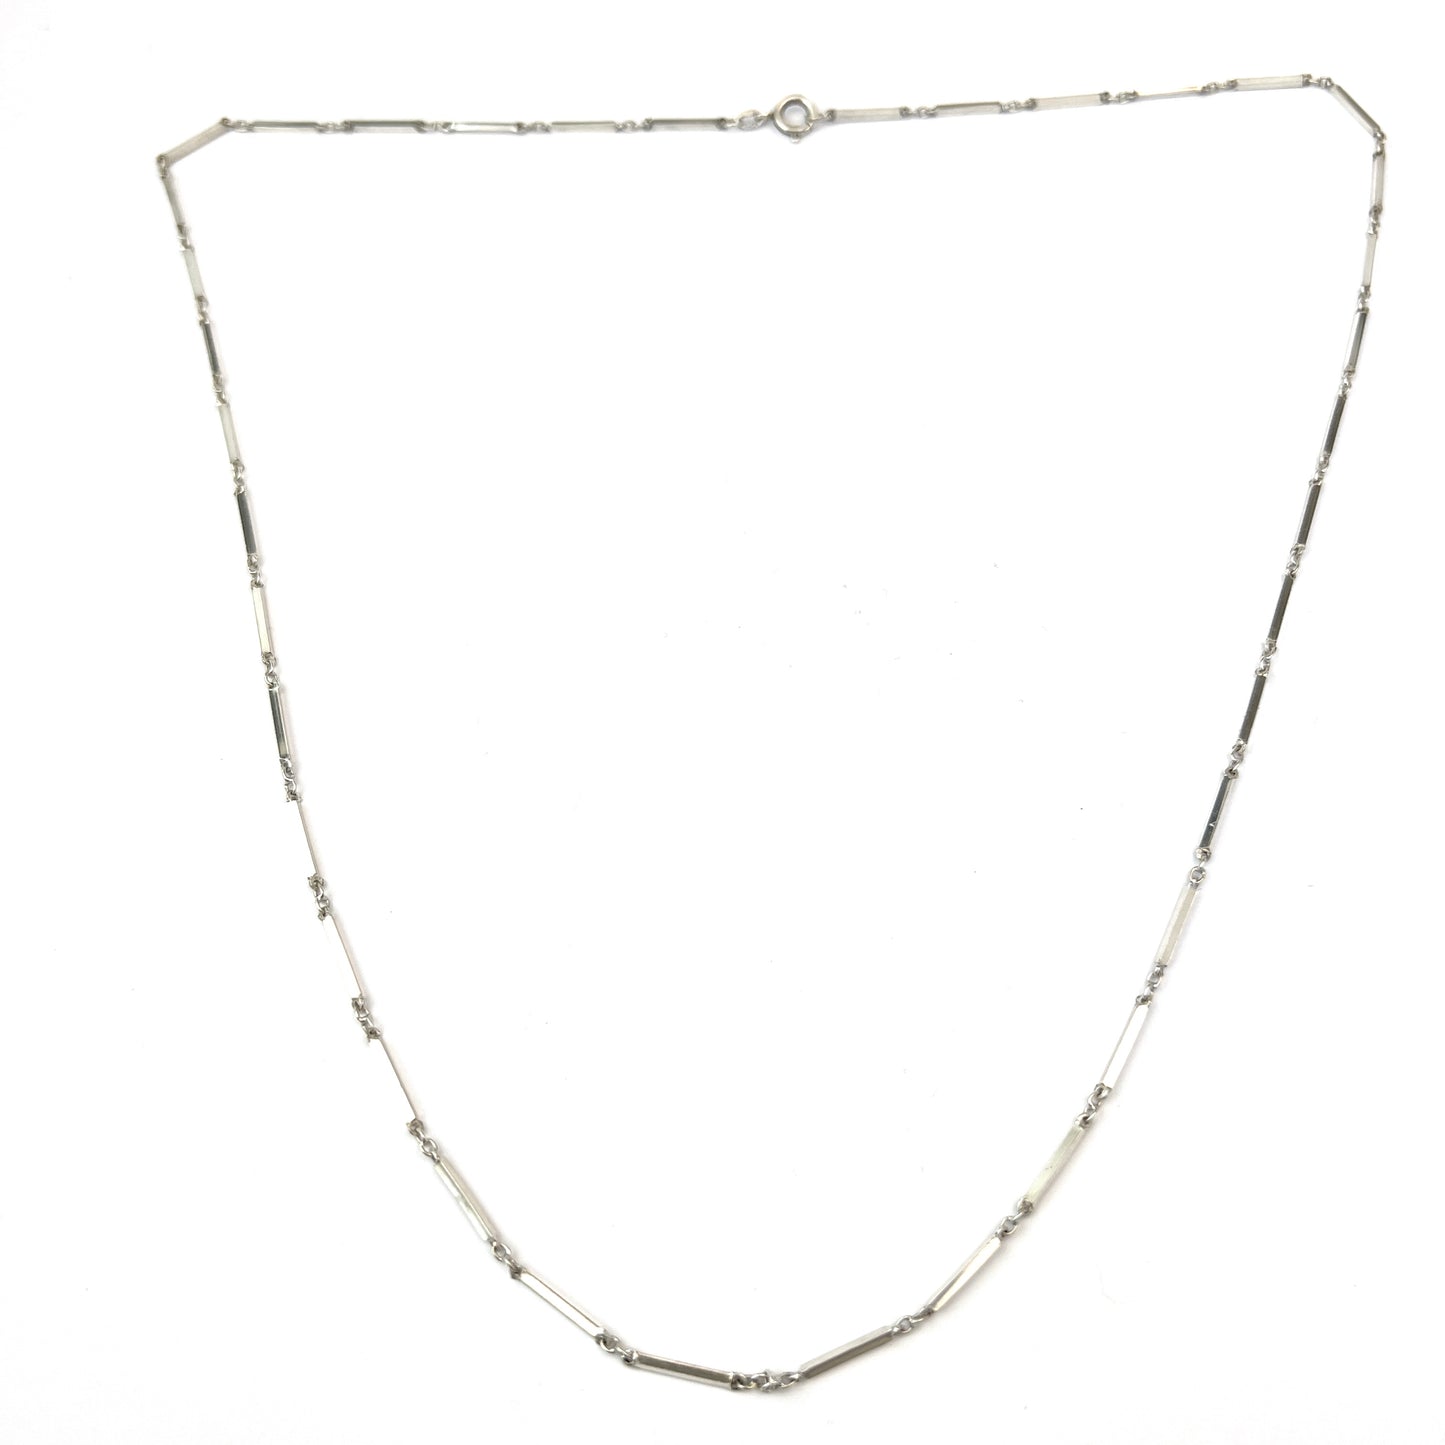 Vintage c 1960s Solid 835 Silver Necklace. 24 inch.